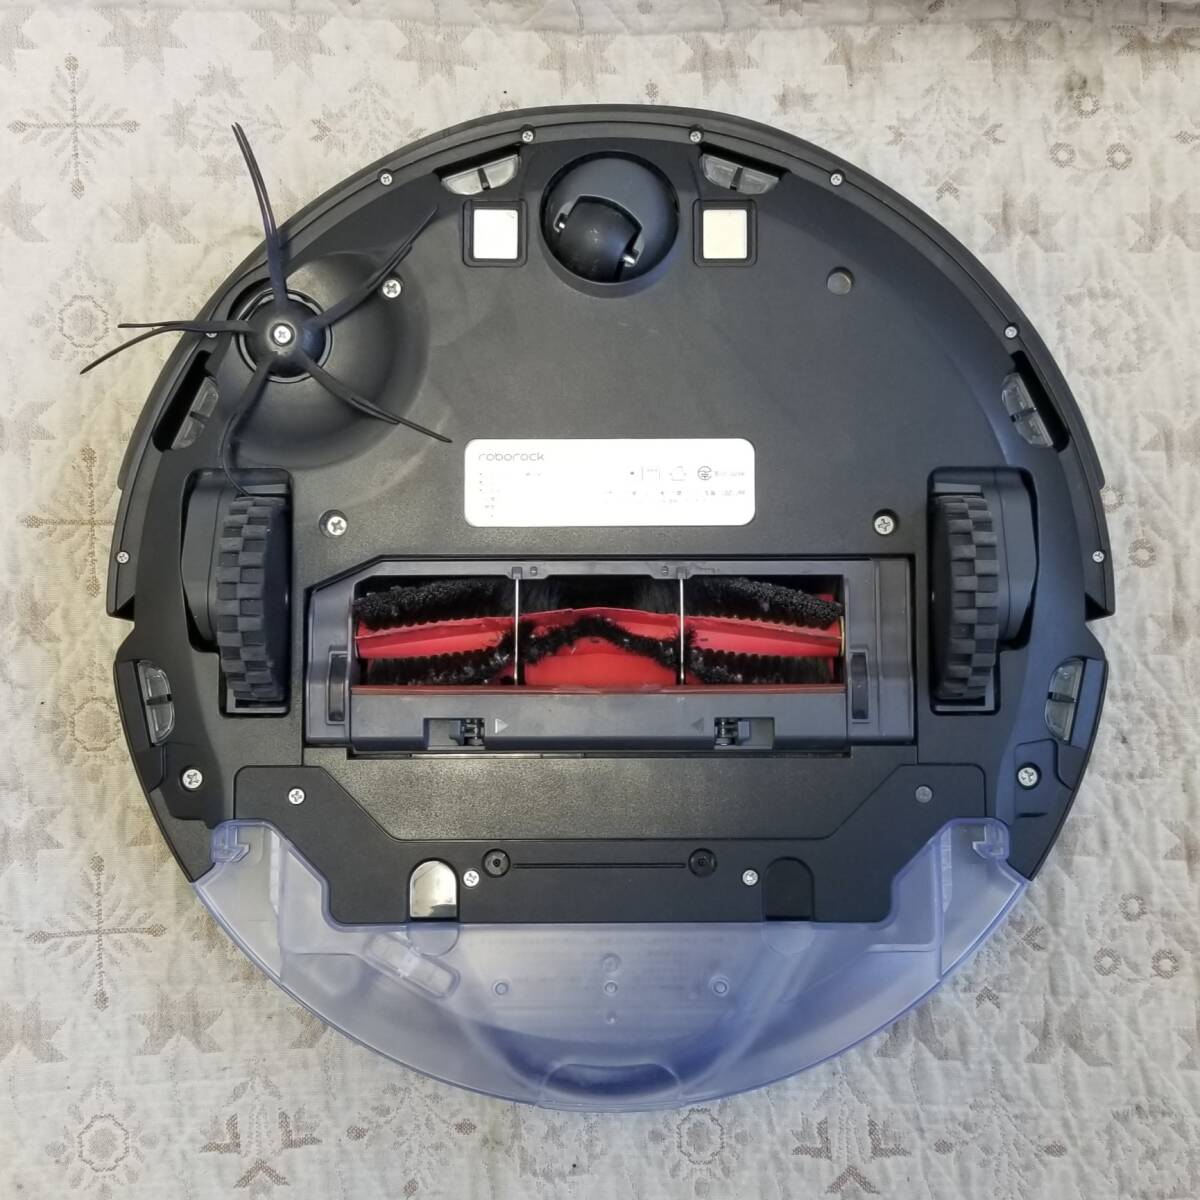 [589] junk roborock S6 MaxV robot vacuum cleaner body only 